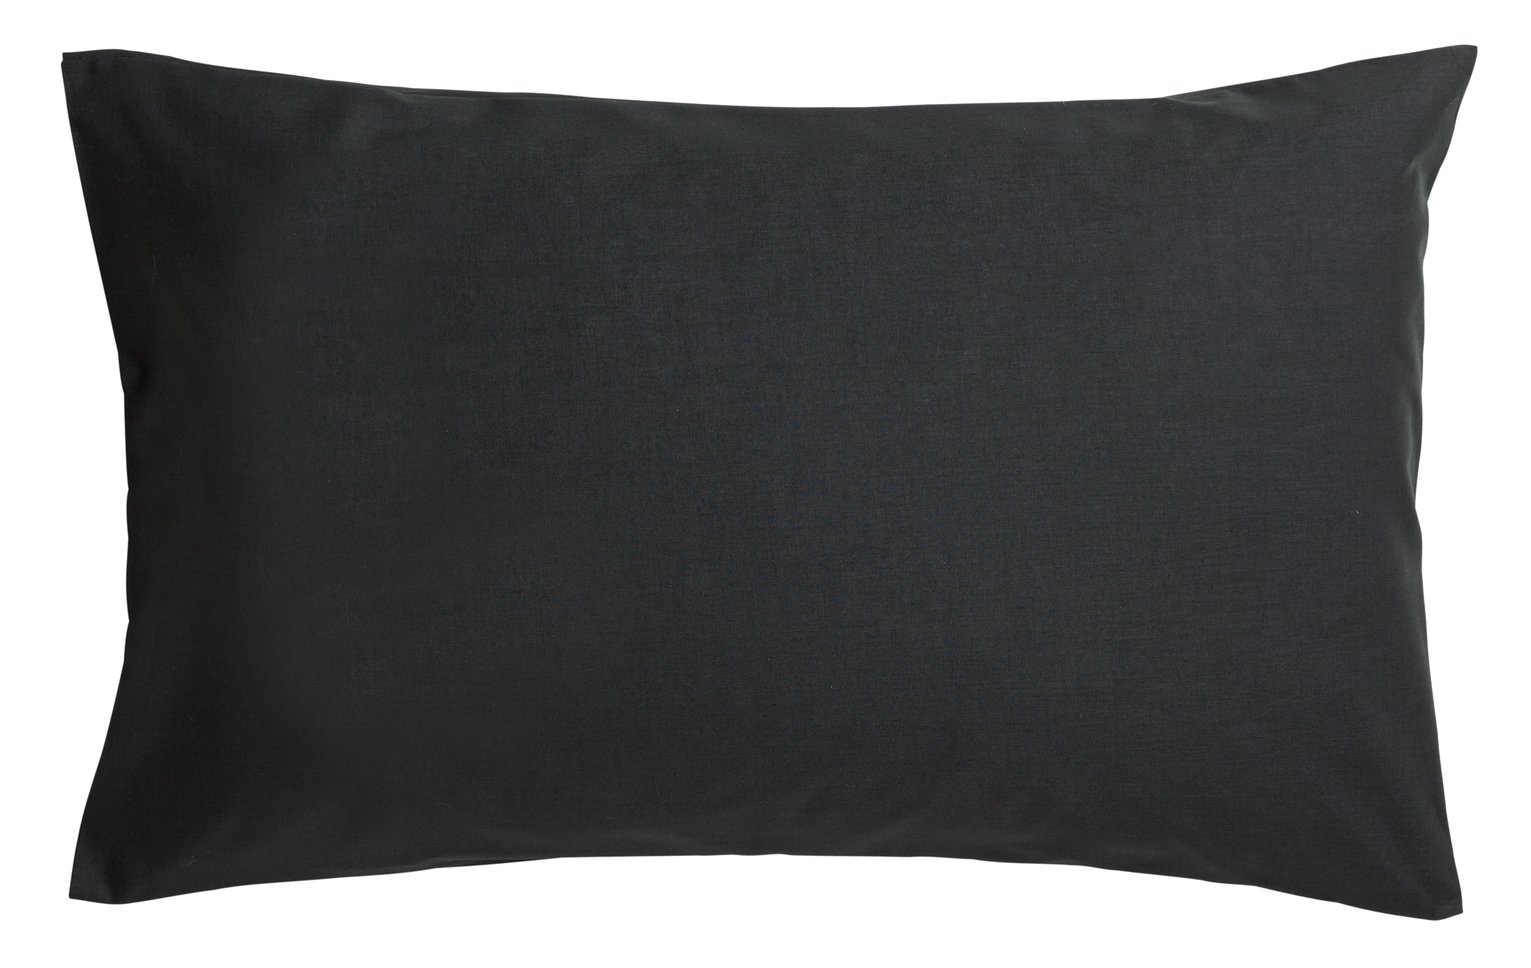 Habitat Easycare Polycotton Standard Pillowcase Pair - Black